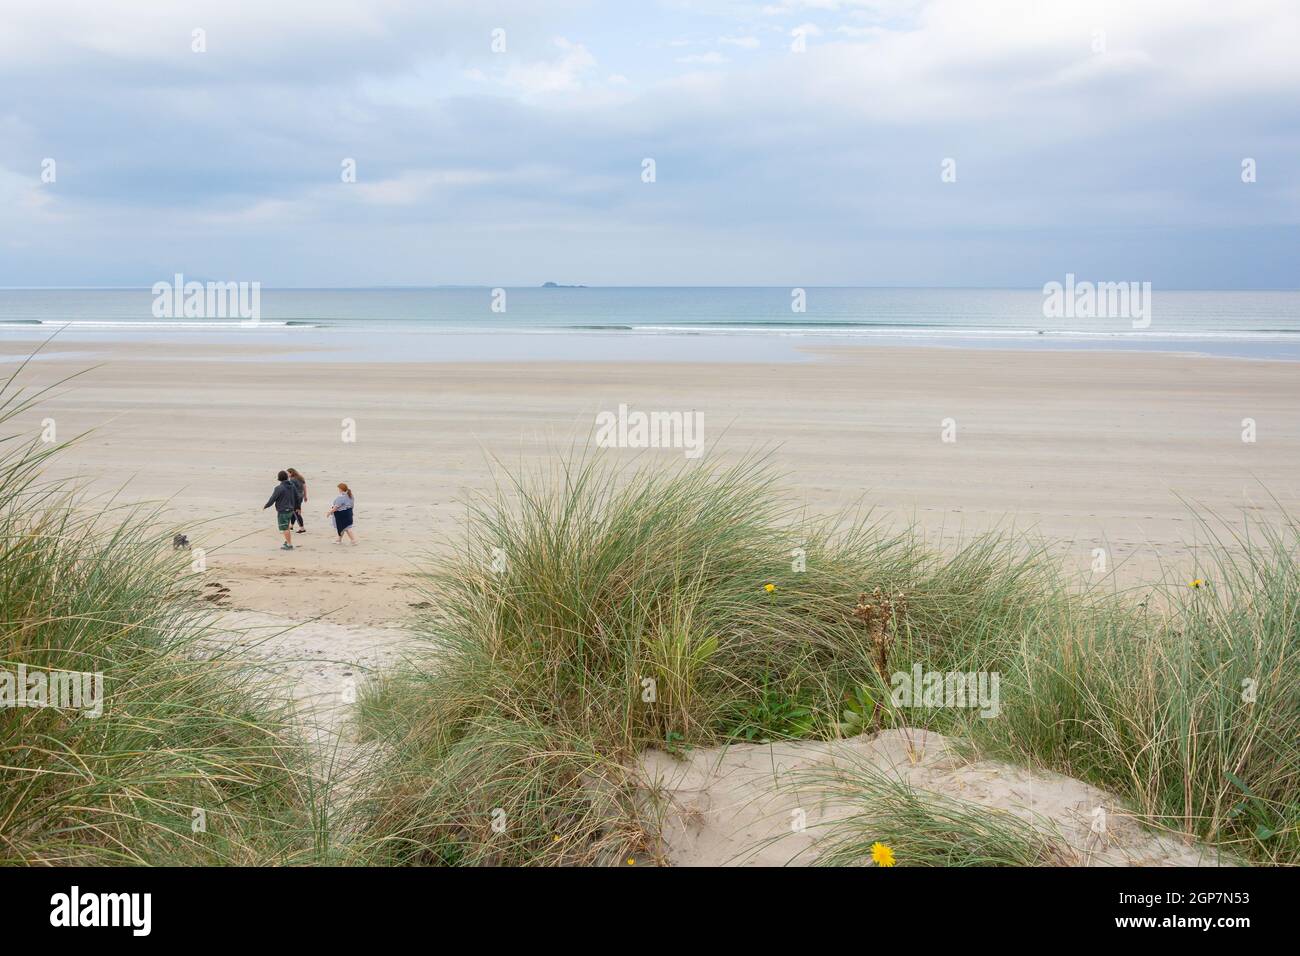 Spiaggia di Banna e dune di sabbia, Ardfert, Contea di Kerry, Repubblica d'Irlanda Foto Stock